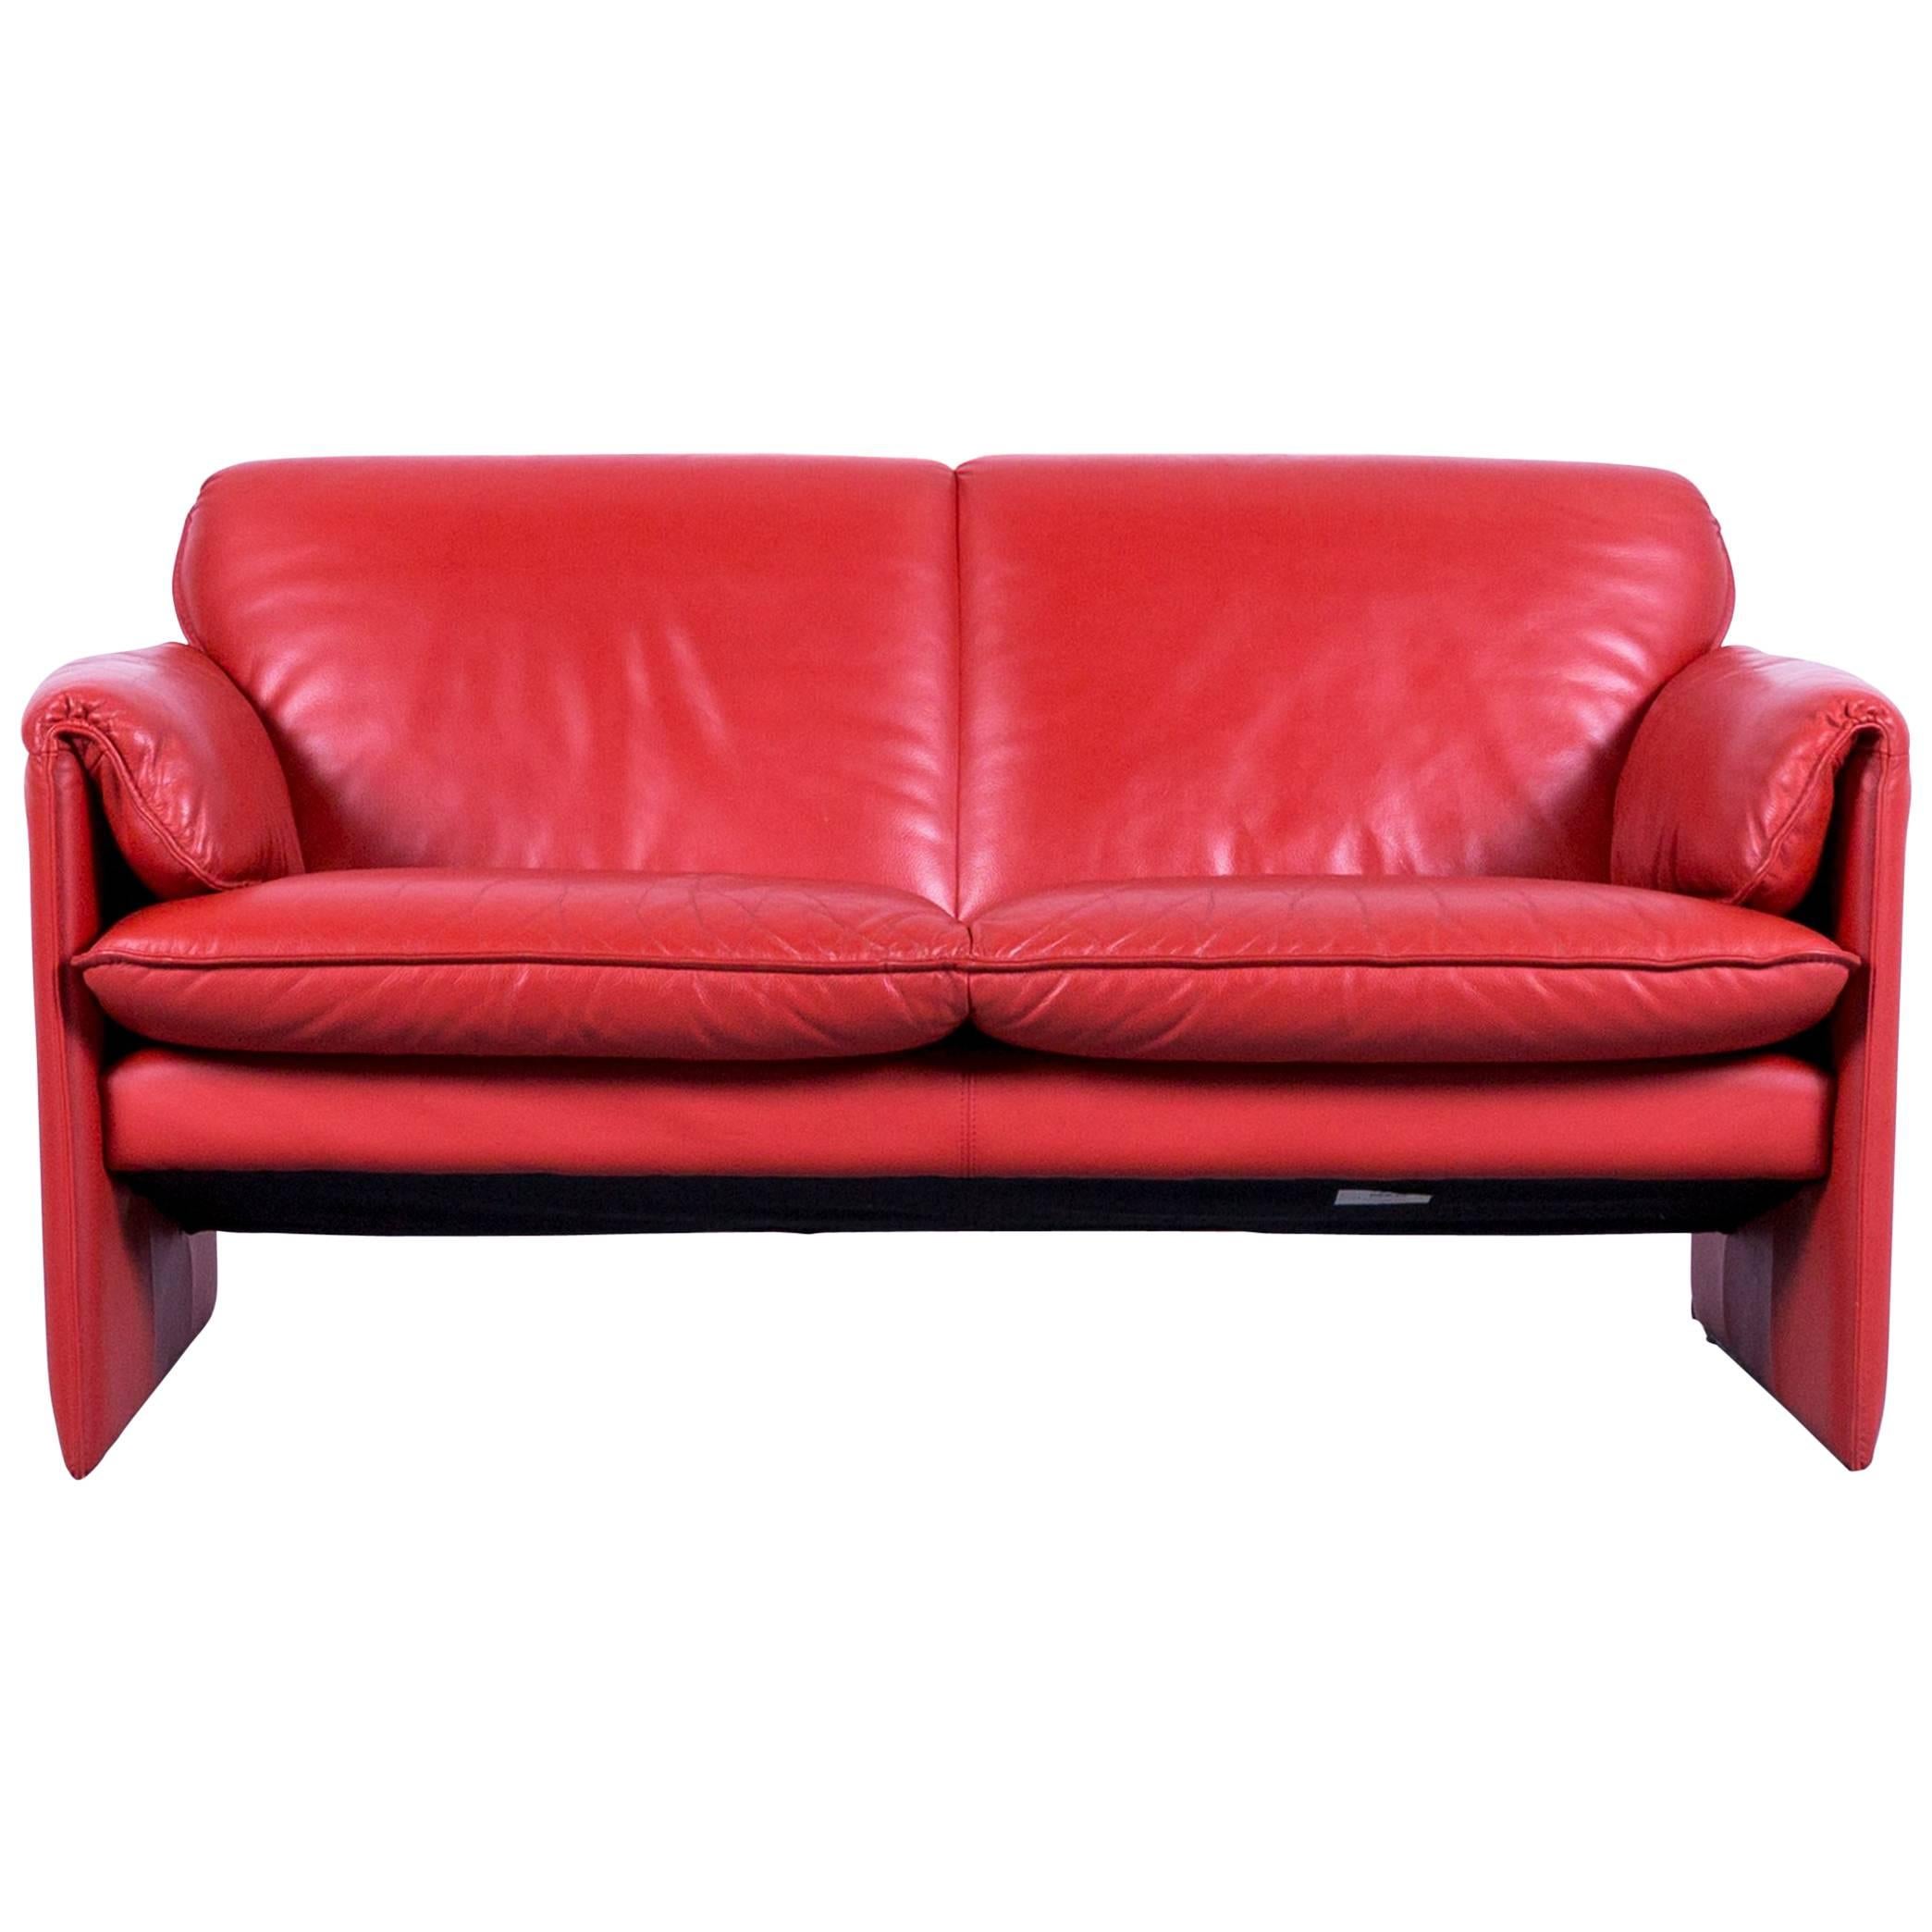 Leolux Bora Designer Sofa Leather Orange Red Two-Seat Couch Modern For Sale